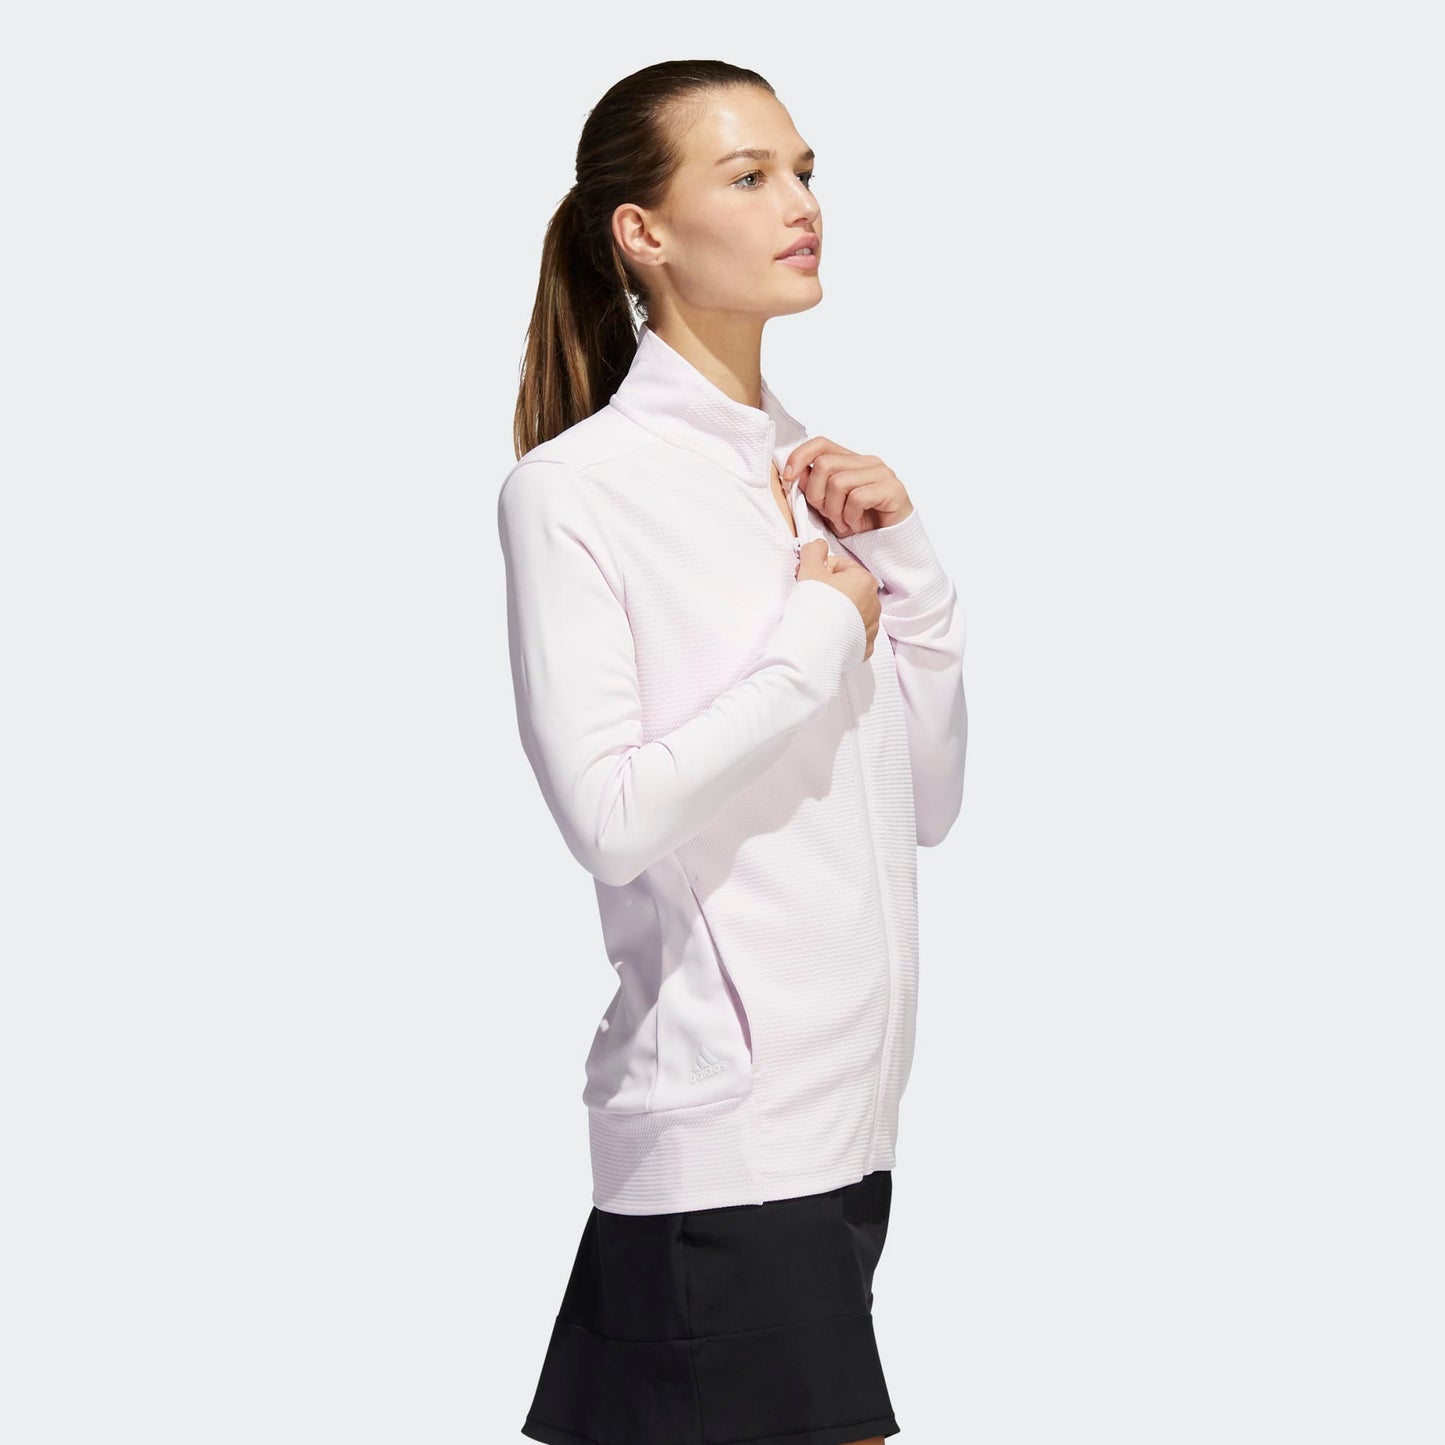 Adidas Textured Full Zip Jacket - Almost Pink